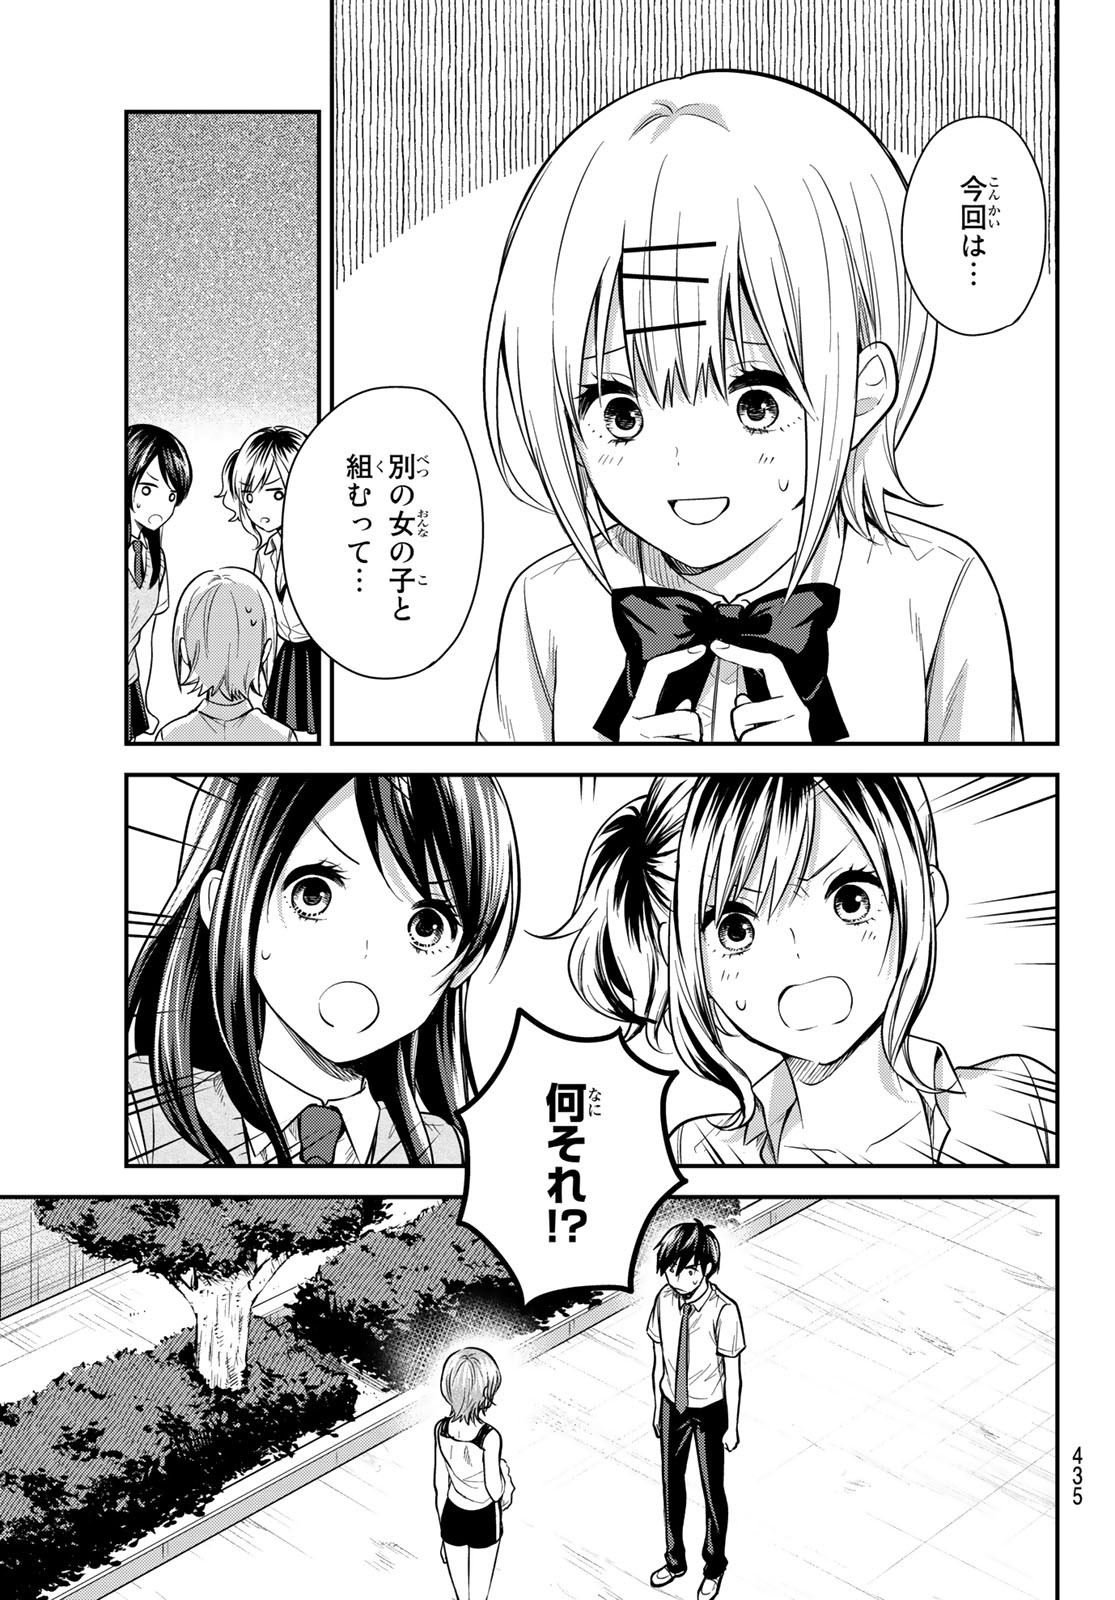 Kimi ga Megami Nara Ii no ni (I Wish You Were My Muse) - Chapter 019 - Page 19